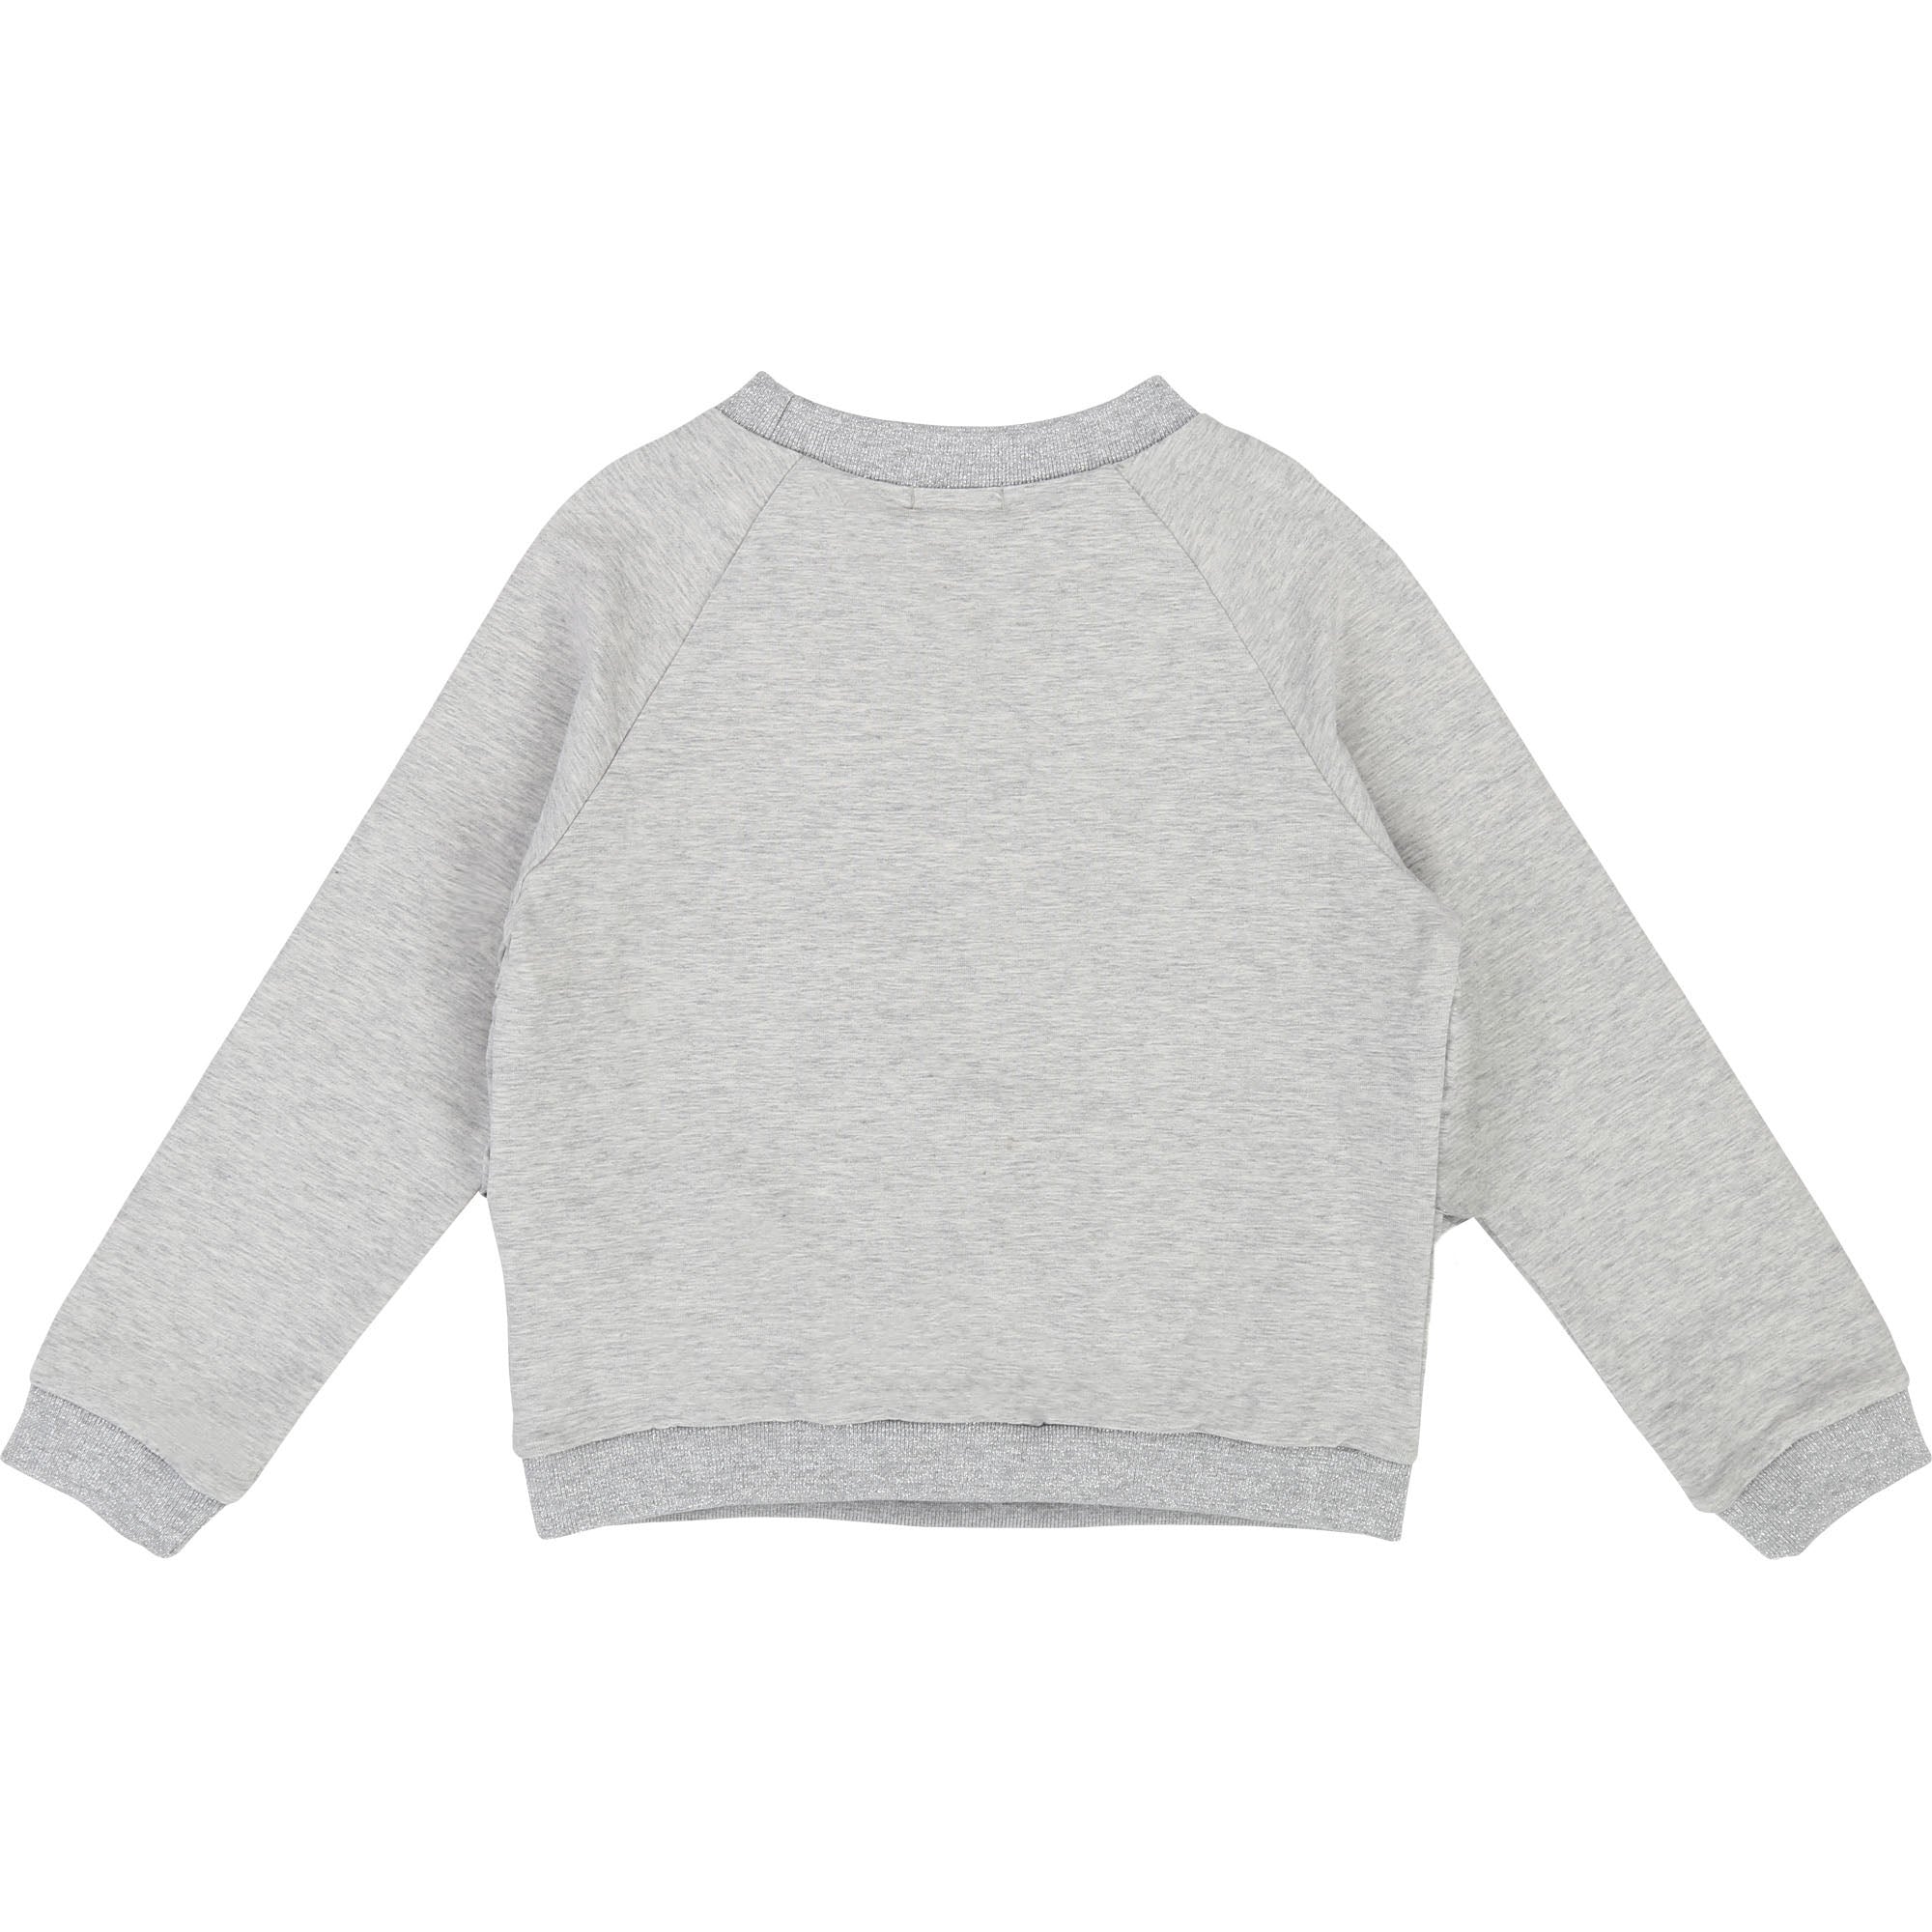 Girls Gray Cotton Sweater